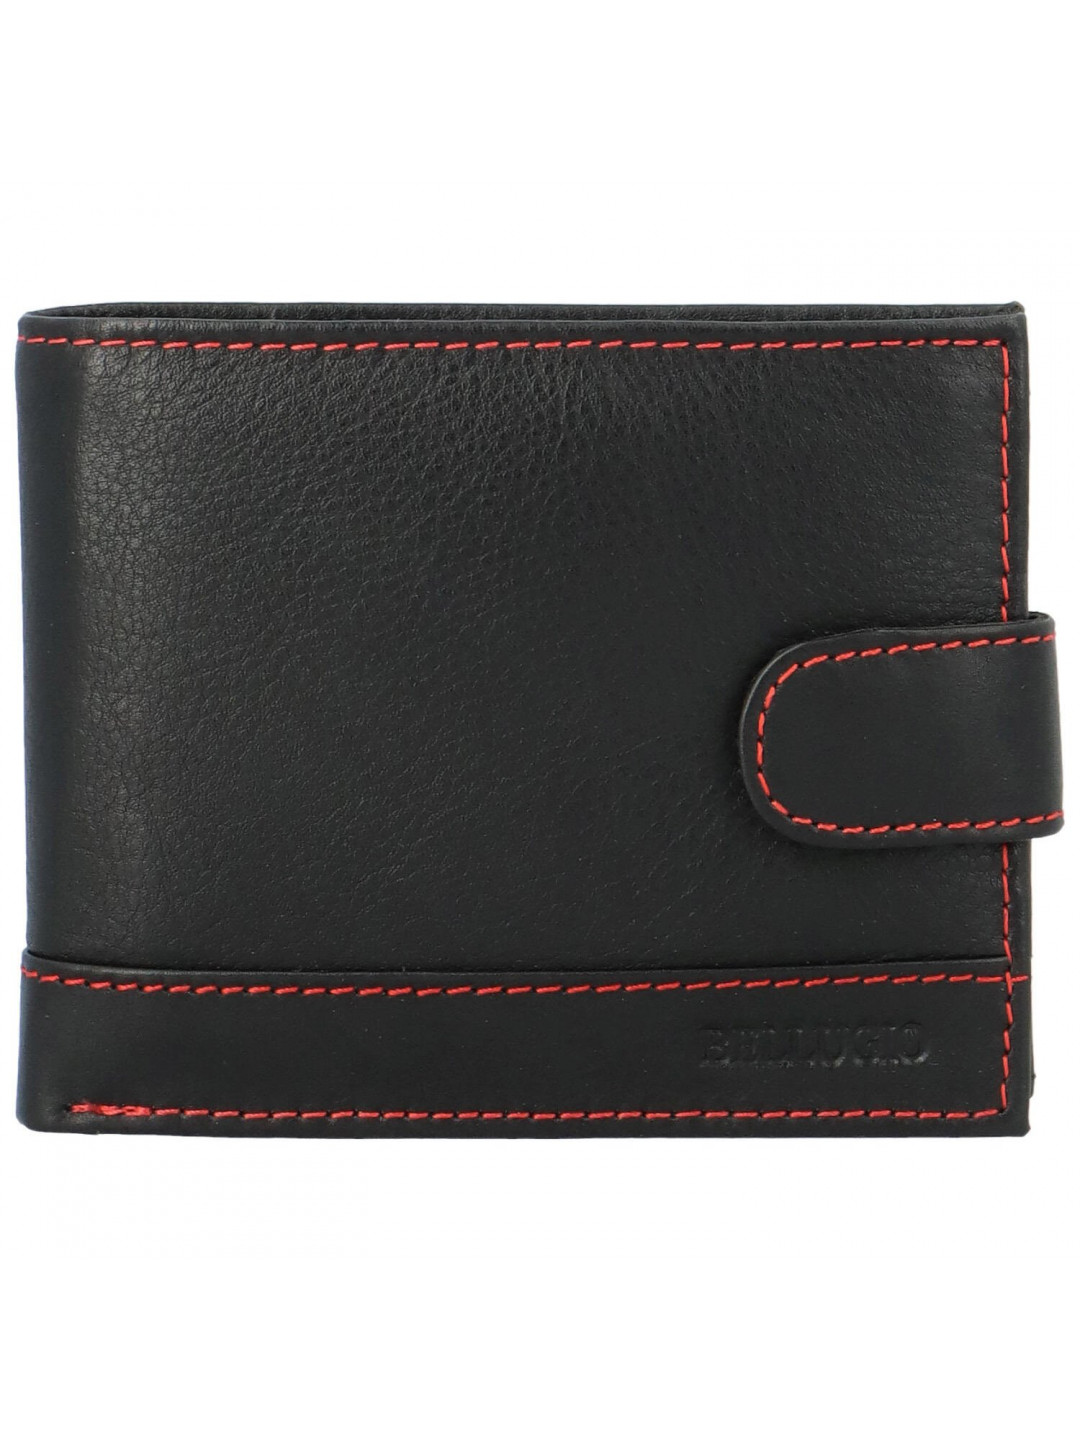 Pánská kožená peněženka na šířku Bellugio Judien černo červená